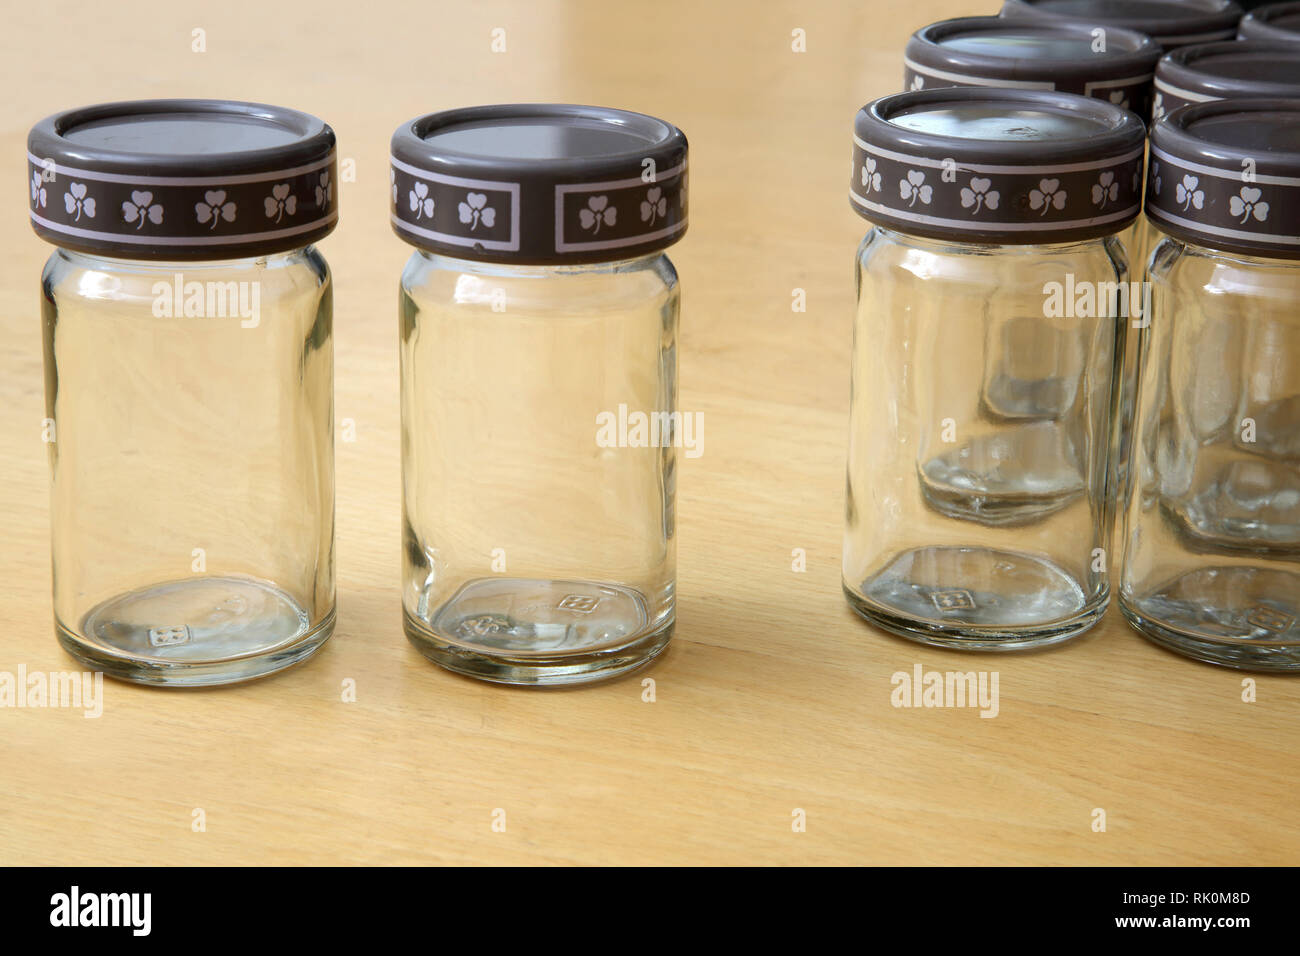 Tarro de cristal con tapa KitchenCraft  Tarros de cristal, Botes de vidrio,  Frascos de vidrio con tapas